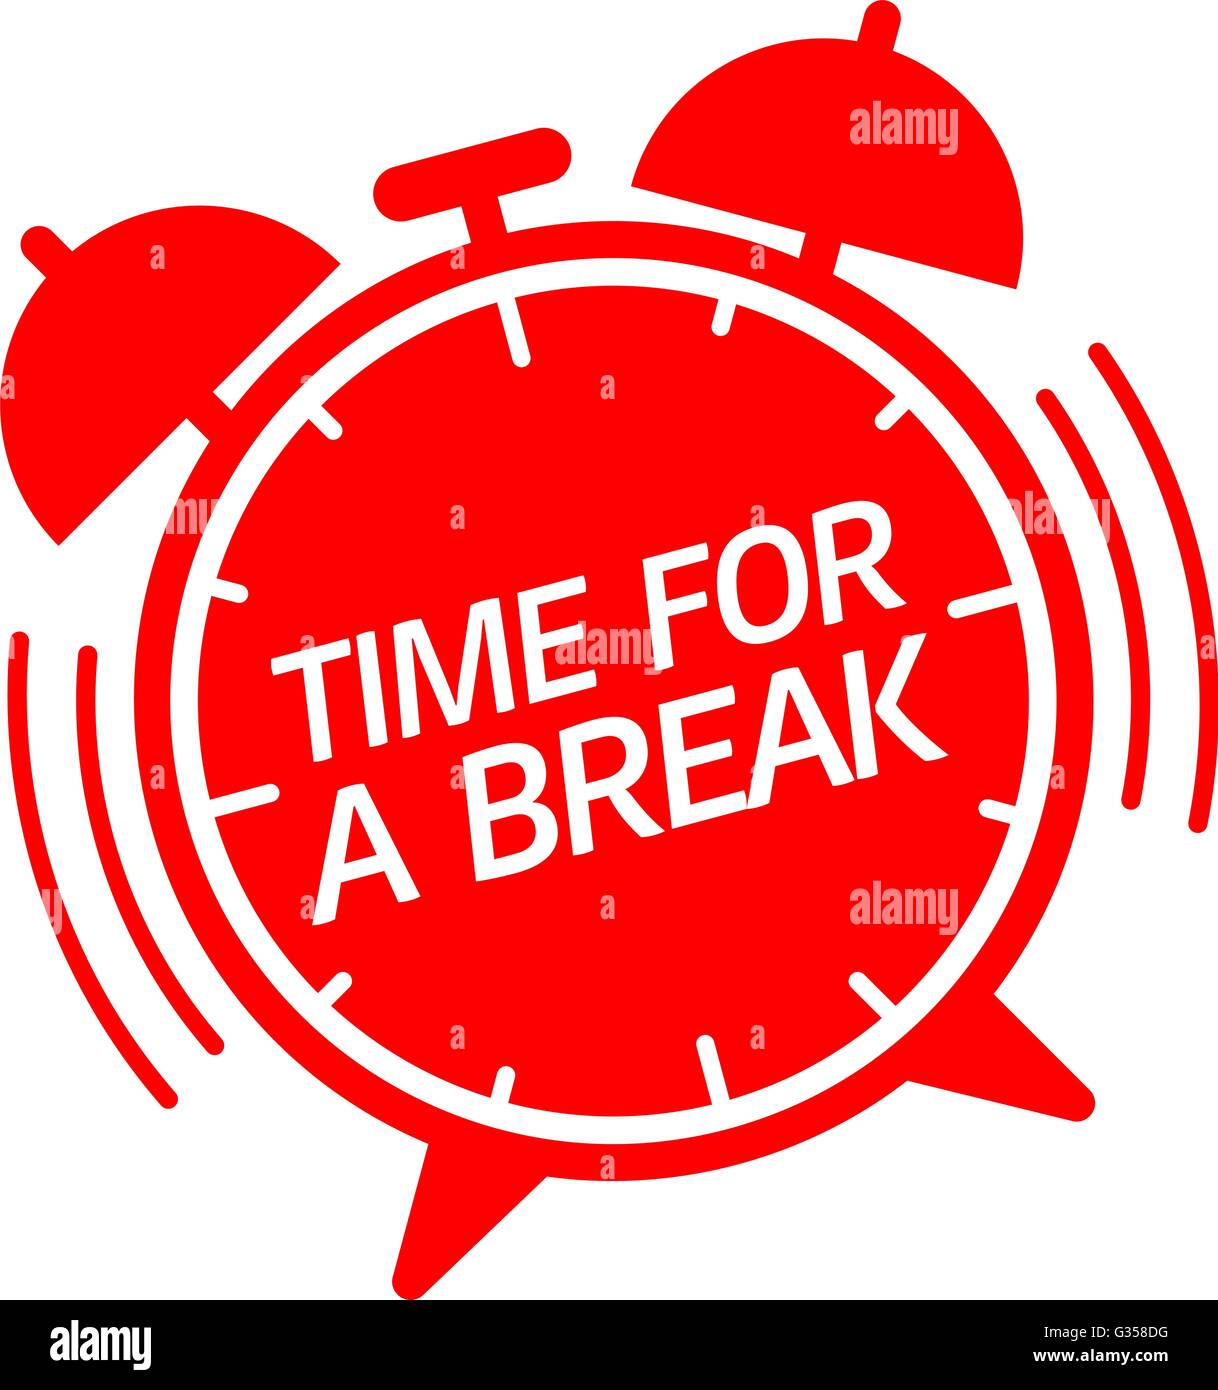 Time for a break clock alarm vector illustration Stock Vector